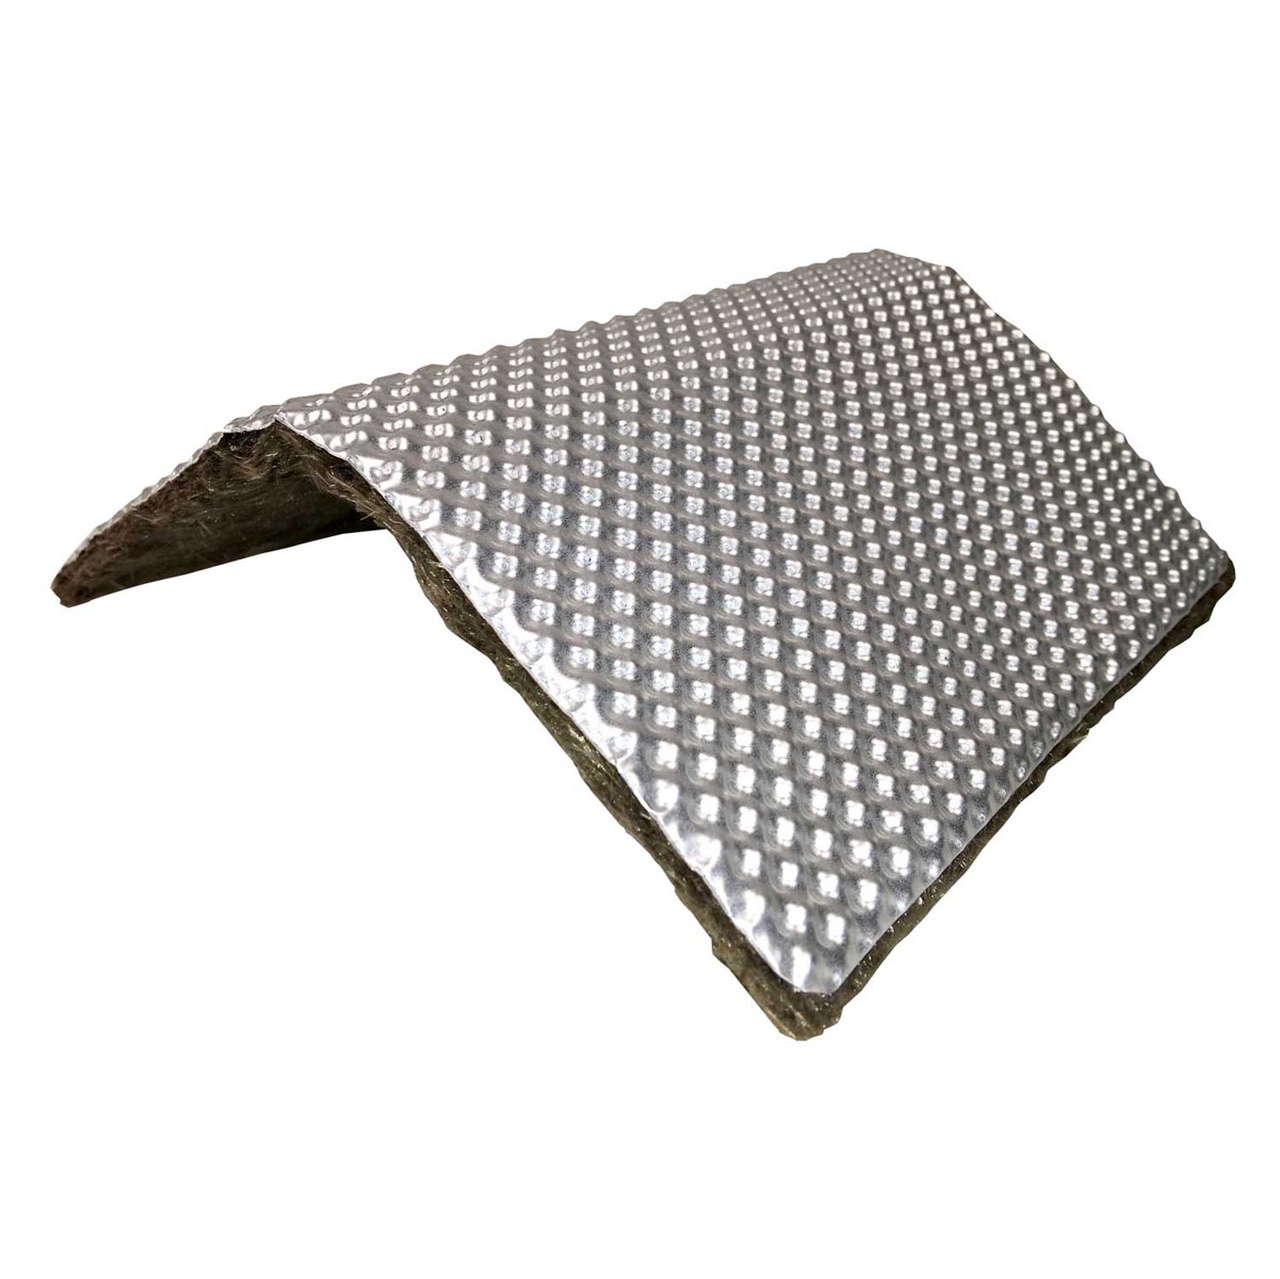 Premium Basaltband 15 mm x 4 mm x 2,5 m flach Beutel 800 °C - Heat  Shieldings